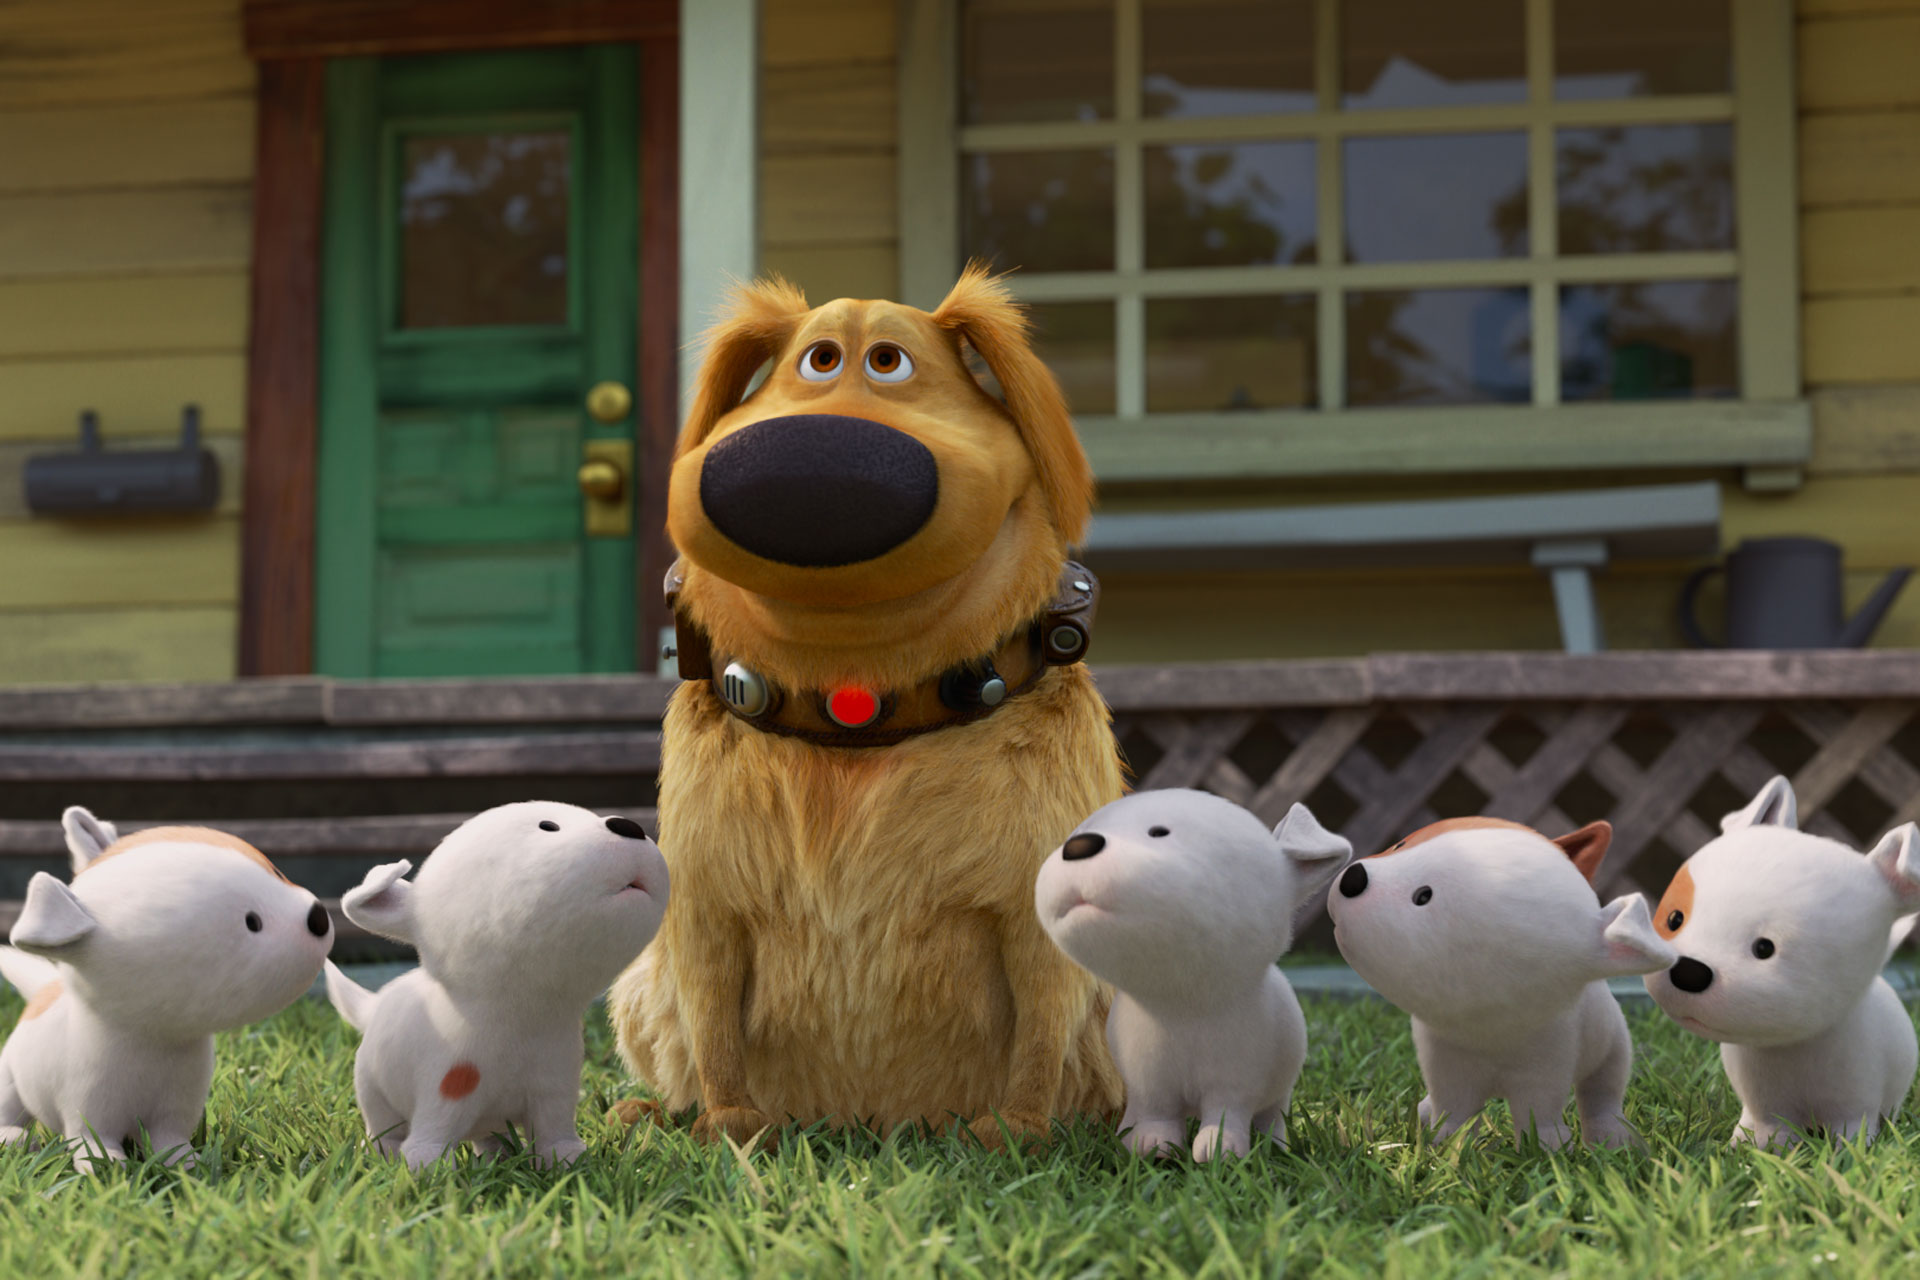 Dug führt ein echtes Hundeleben. Bild: Disney Pixar